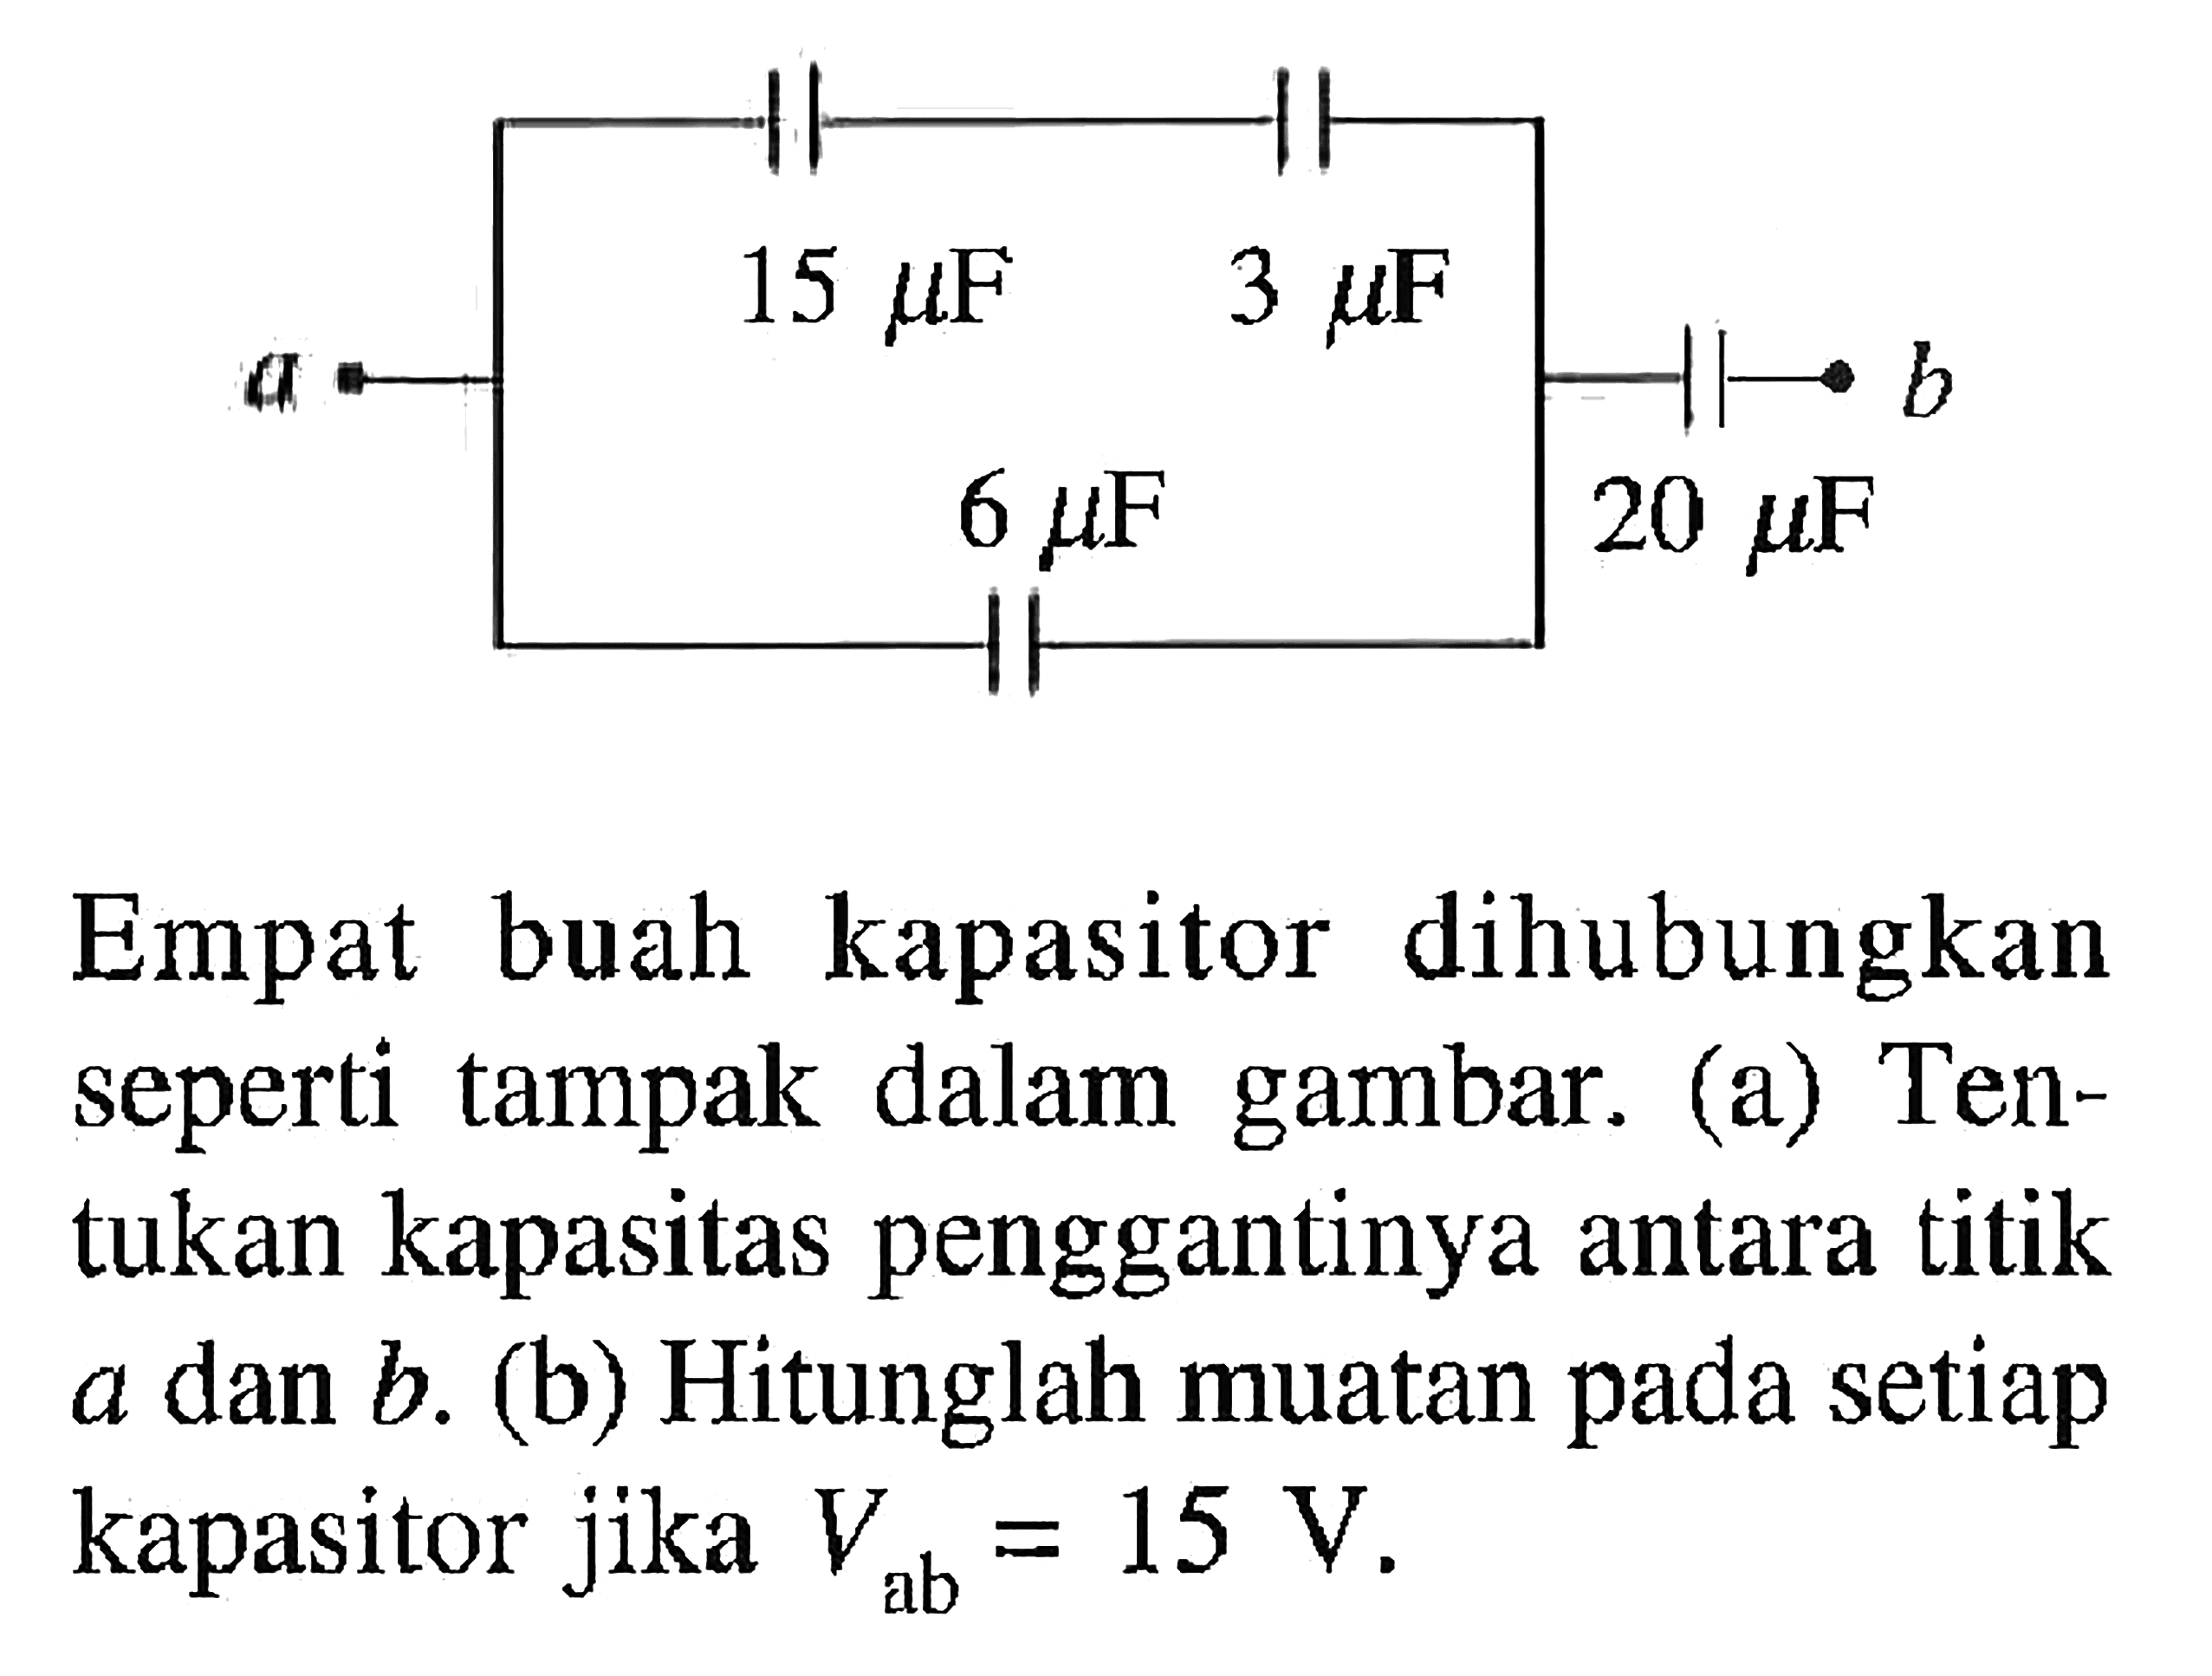 Empat buah kapasitor dihubungkan seperti tampak dalam gambar: (a) Ten- tukan kapasitas penggantinya antara titik a dan b. (b) Hitunglah muatan setiap kapasitor jika VAB = 15 V.